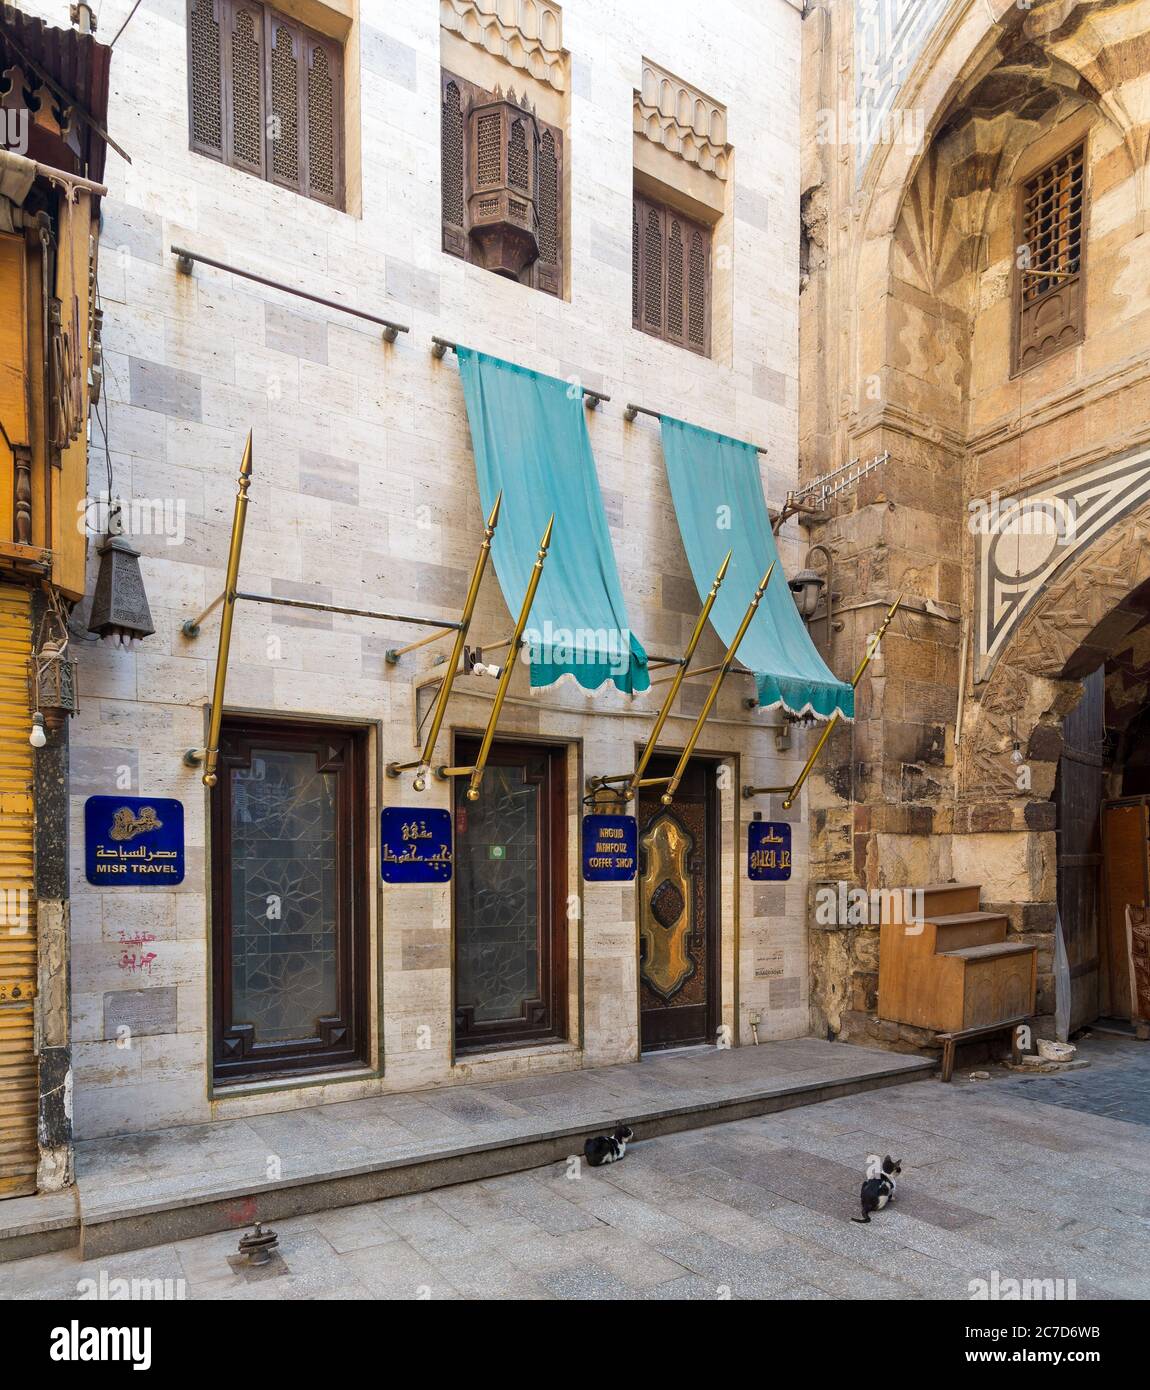 Cairo, Egitto - Giugno 26 2020: Moderna e famosa caffetteria Naguib Mahfouz, situata nella storica era Mamluk Khan al-Khalili famoso bazar e souq, chiuso durante il blocco Covid-19 Foto Stock